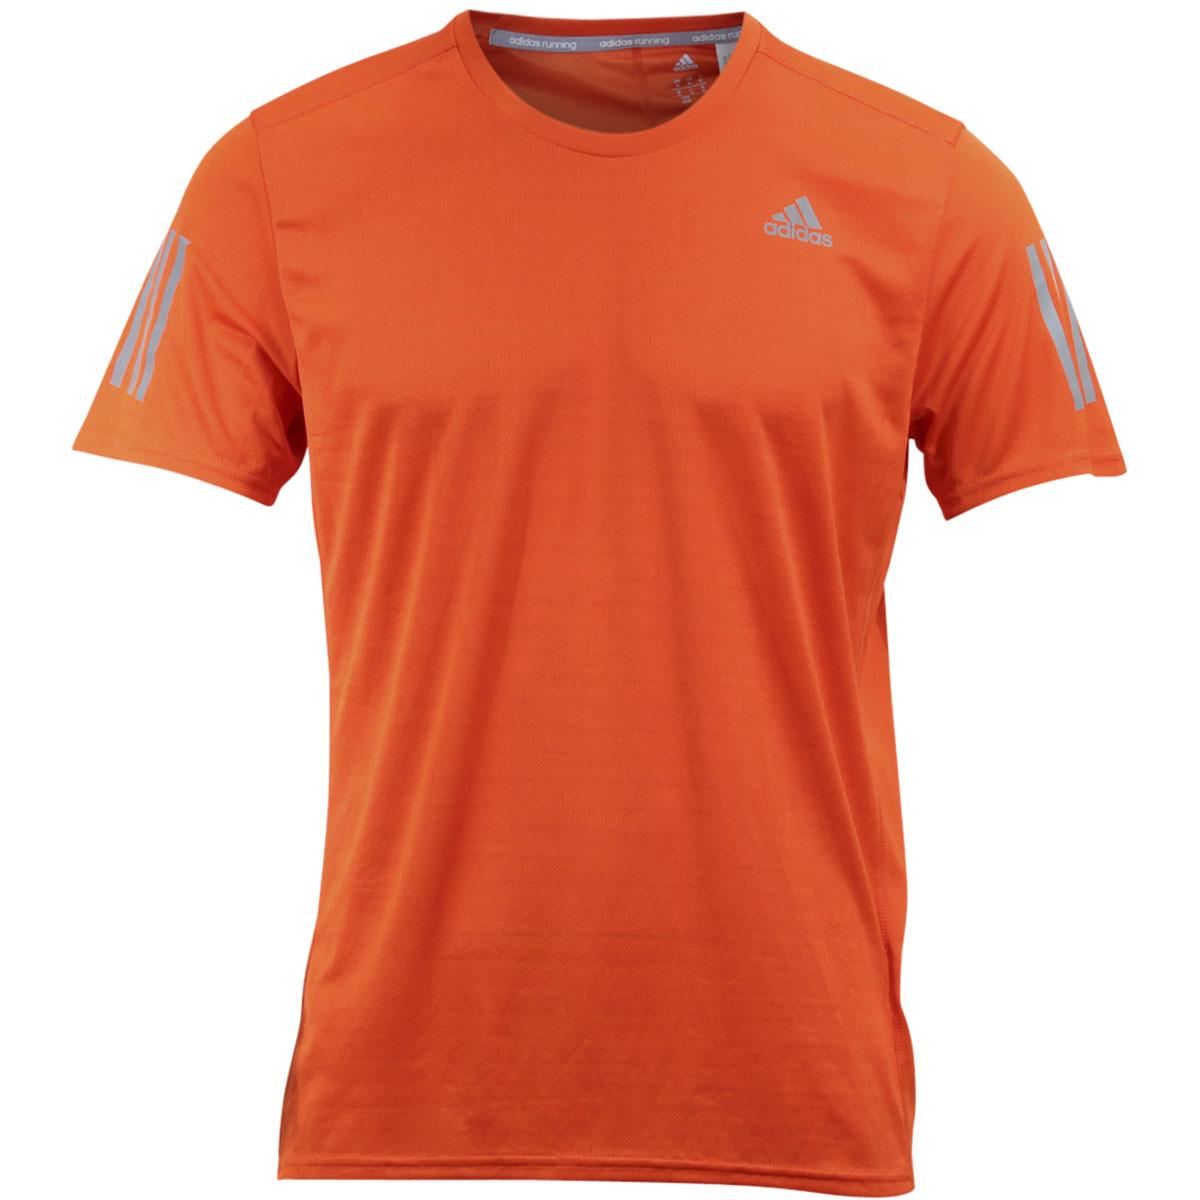 Adidas Men's Response Trail Running Climacool Short Sleeve T-Shirt